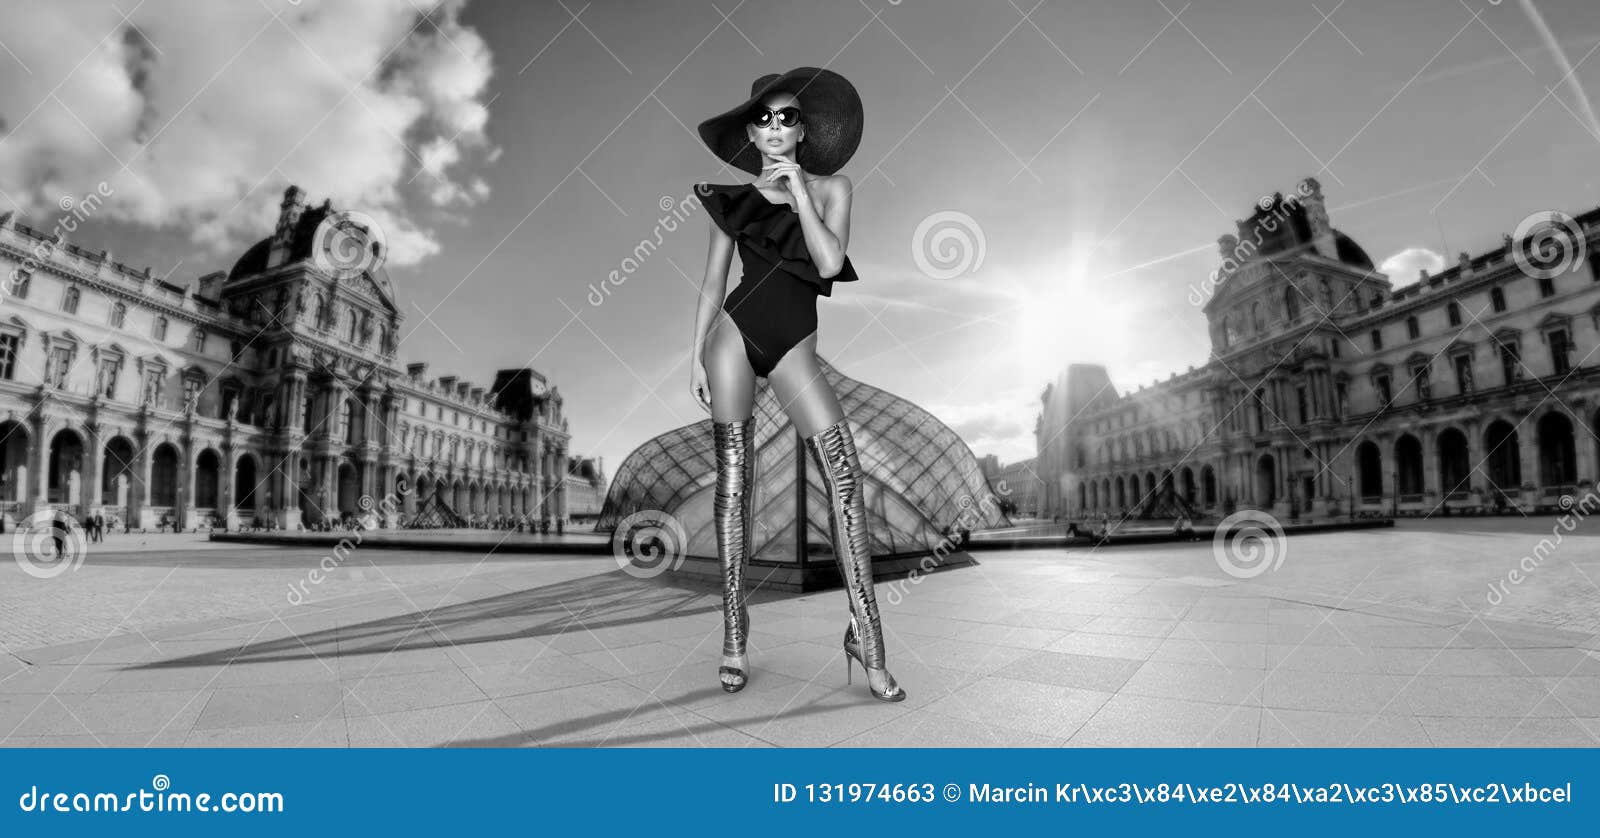 udobnost, izazov - Page 16 Elegant-woman-hat-bikini-sunglasses-amazing-high-h-model-heels-shoes-paris-france-131974663